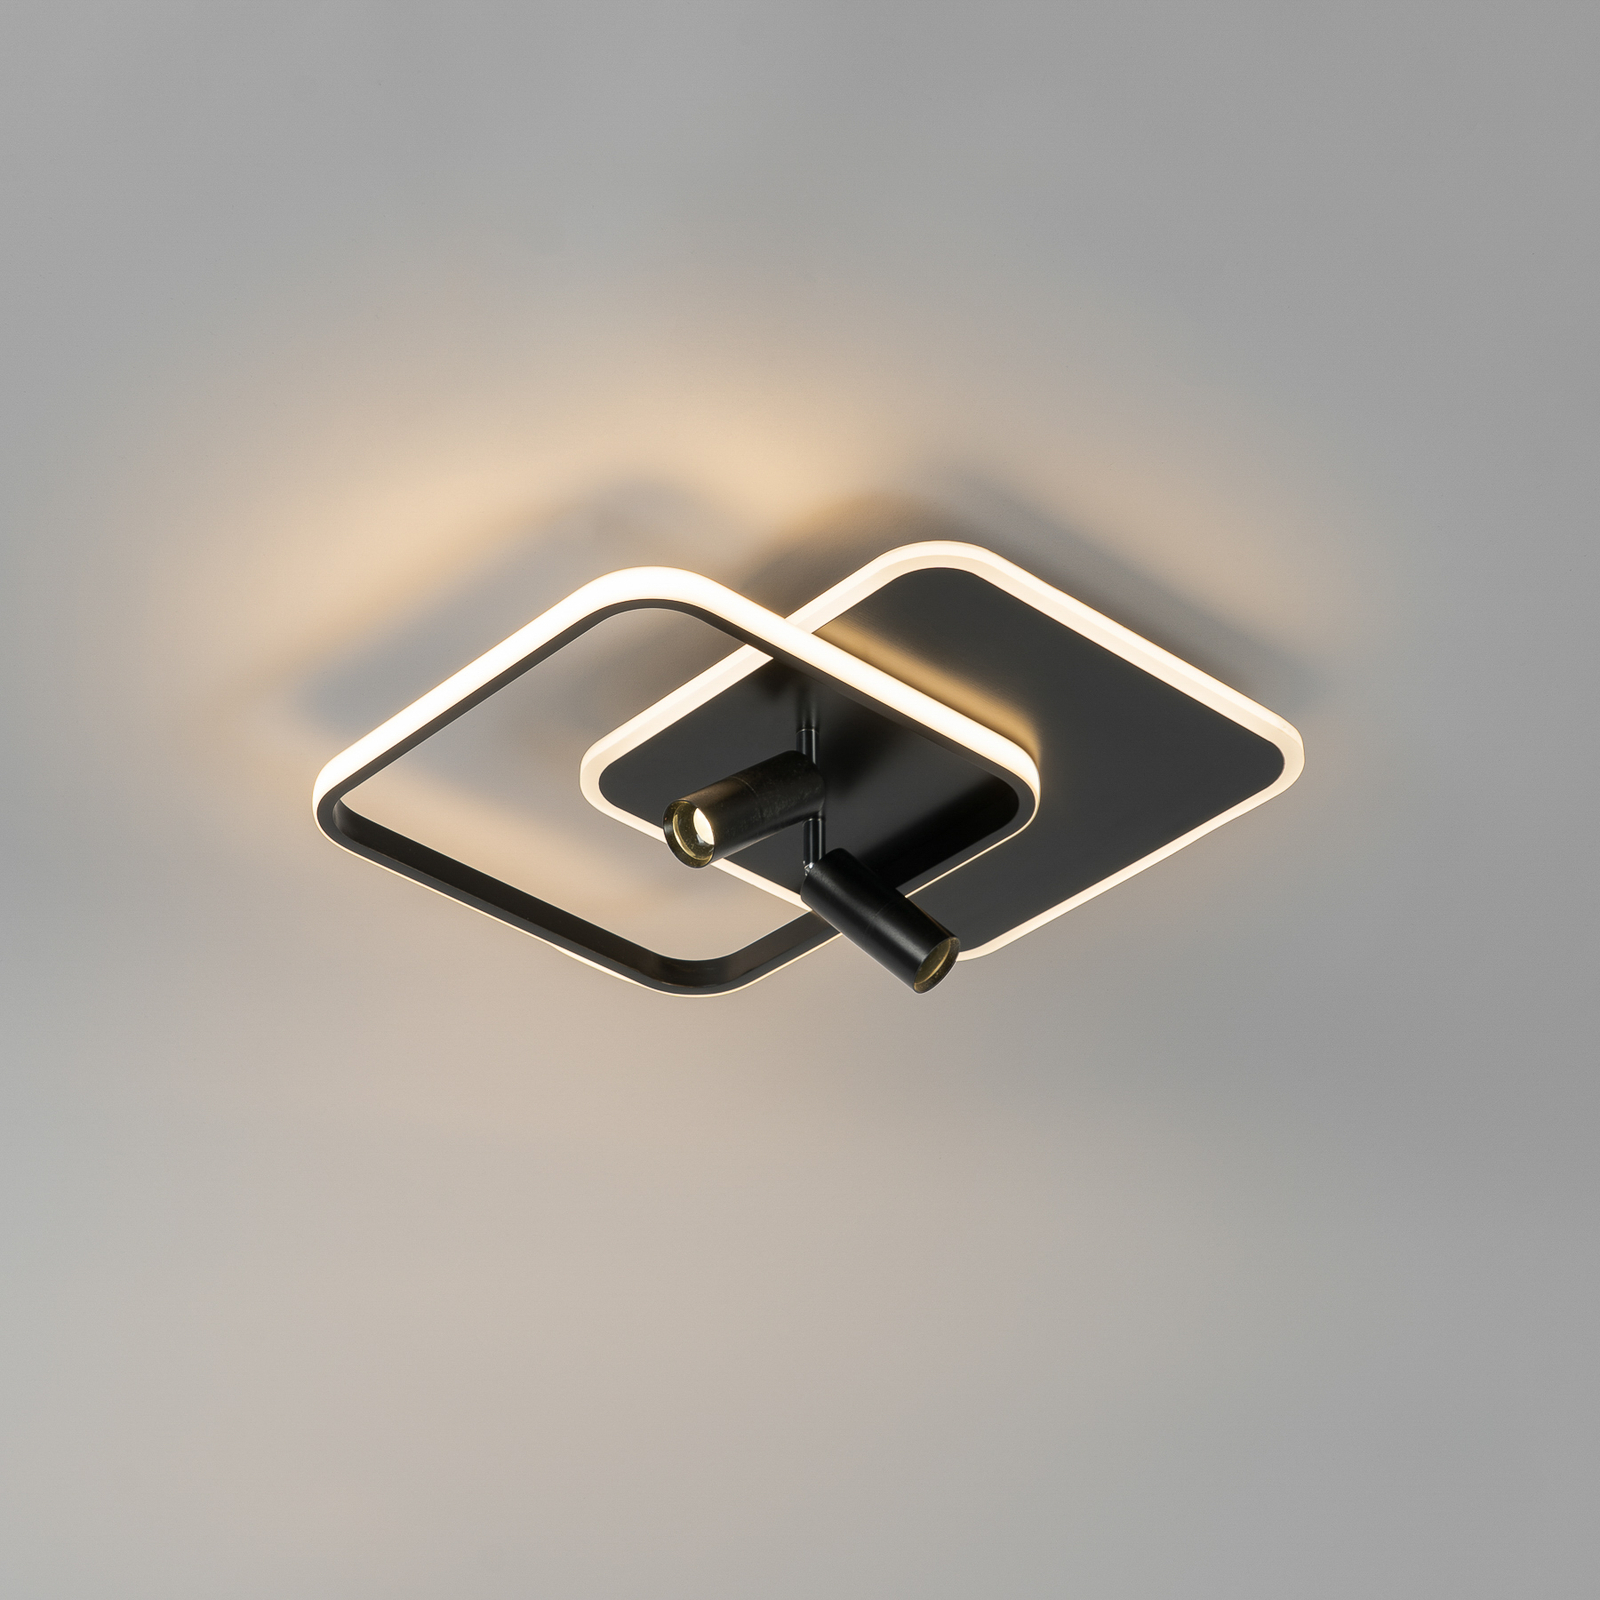 Lucande Tival LED stropné svietidlo hranaté, 43 cm, čierne